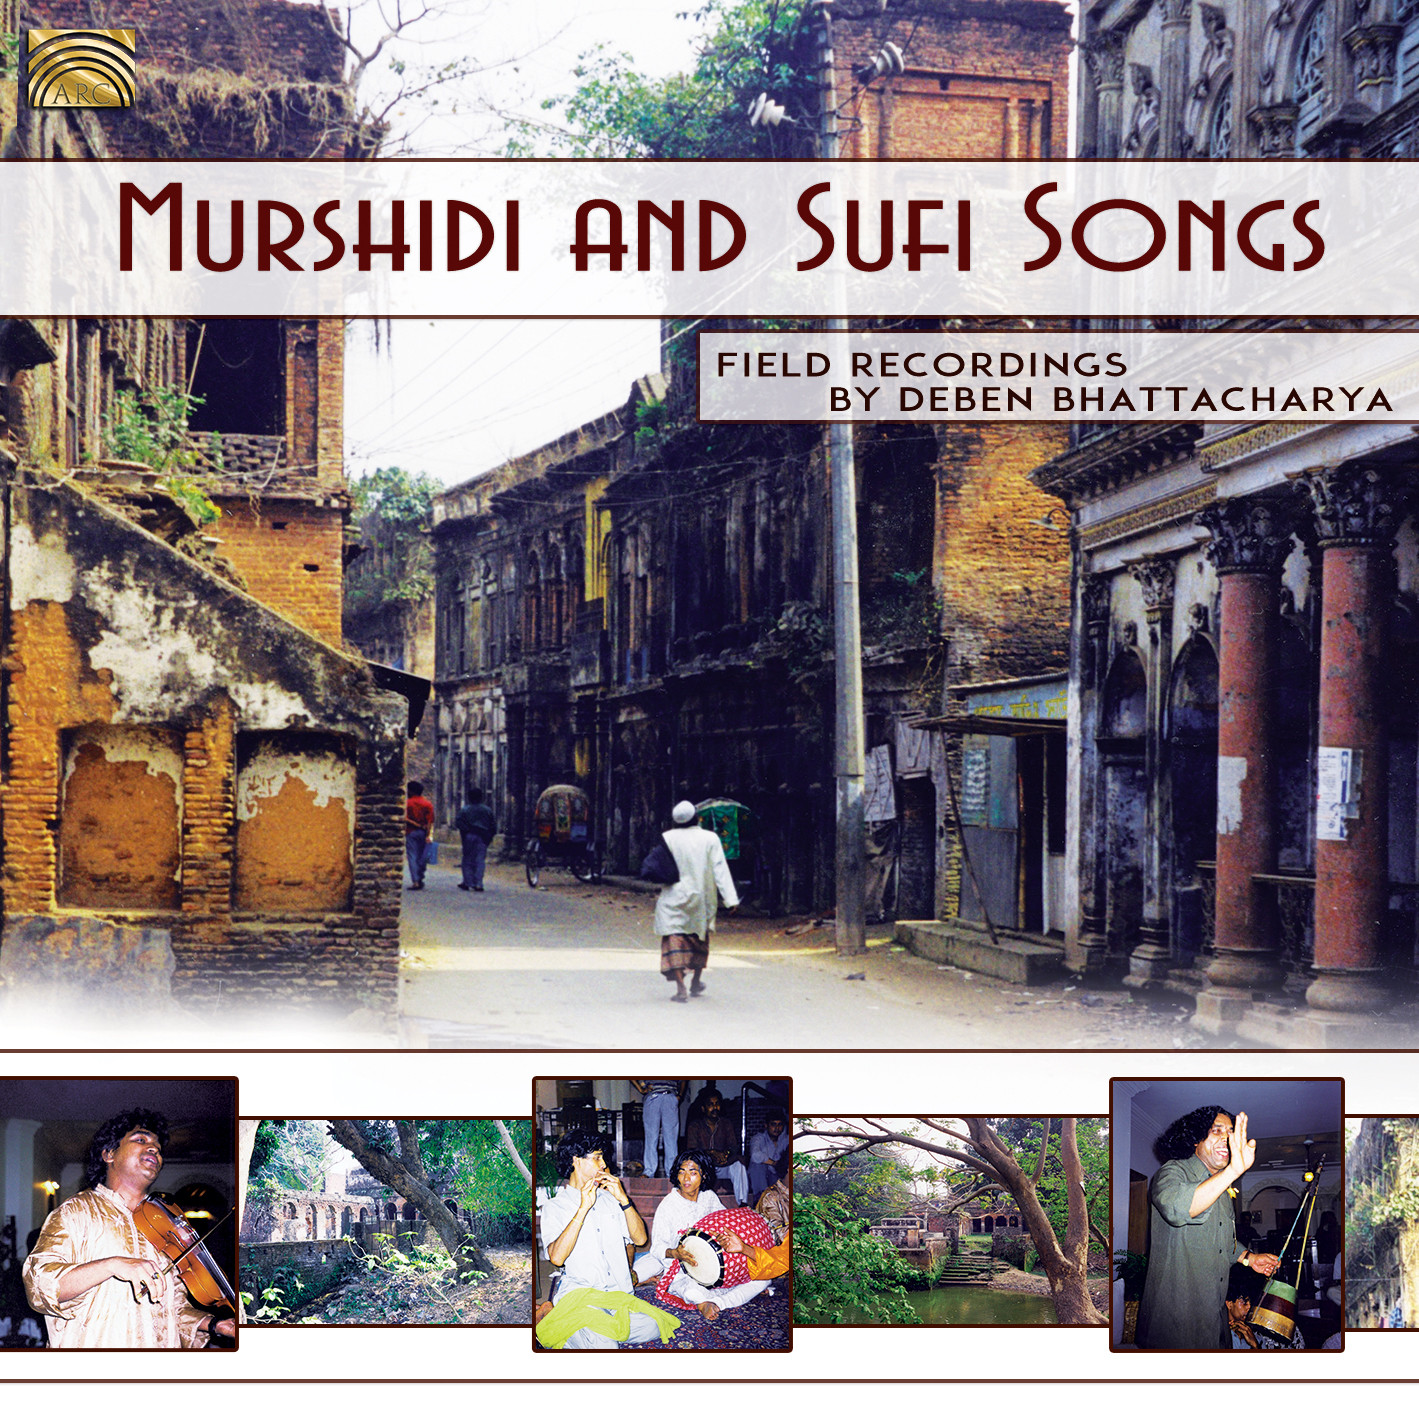 EUCD2555 Murshidi and Sufi Songs - Field recordings by Deben Bhattacharya